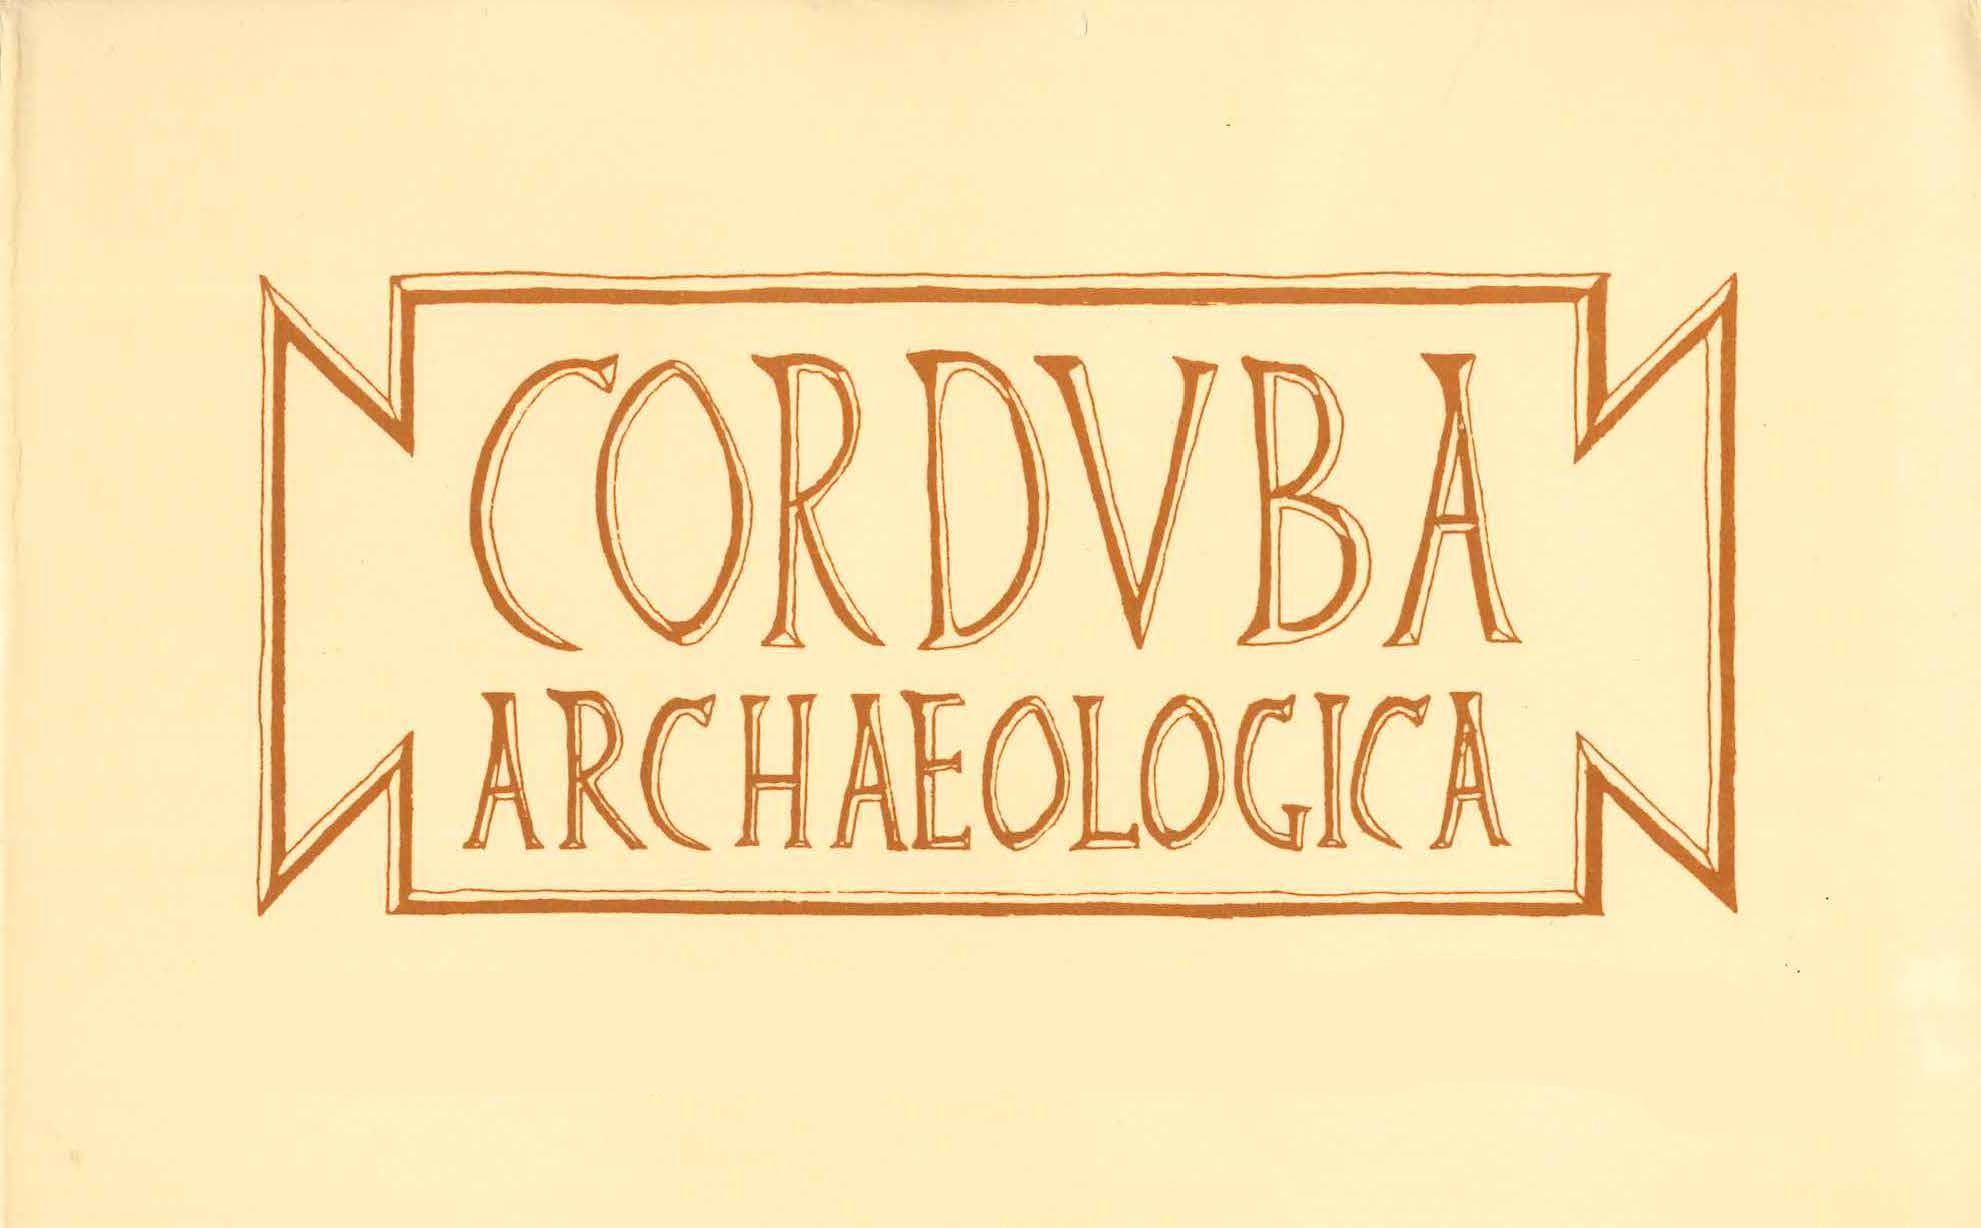 Corduba Archeologica